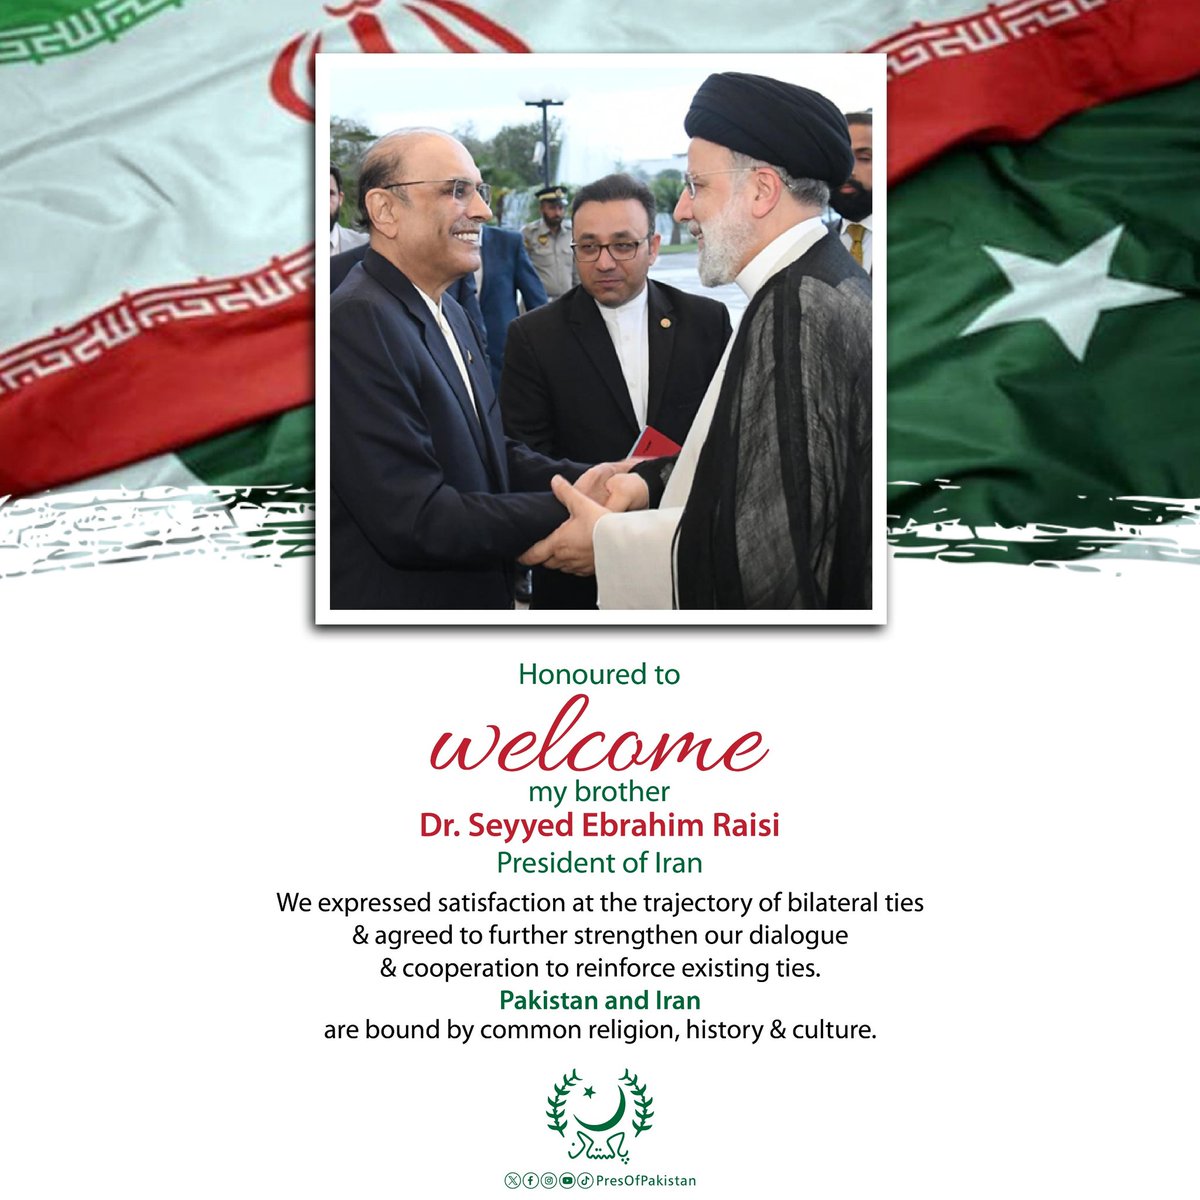 President Asif Ali Zardari welcomed the Iranian President Seyyed Ebrahim Raisi upon his arrival, at Aiwan-e-Sadr.